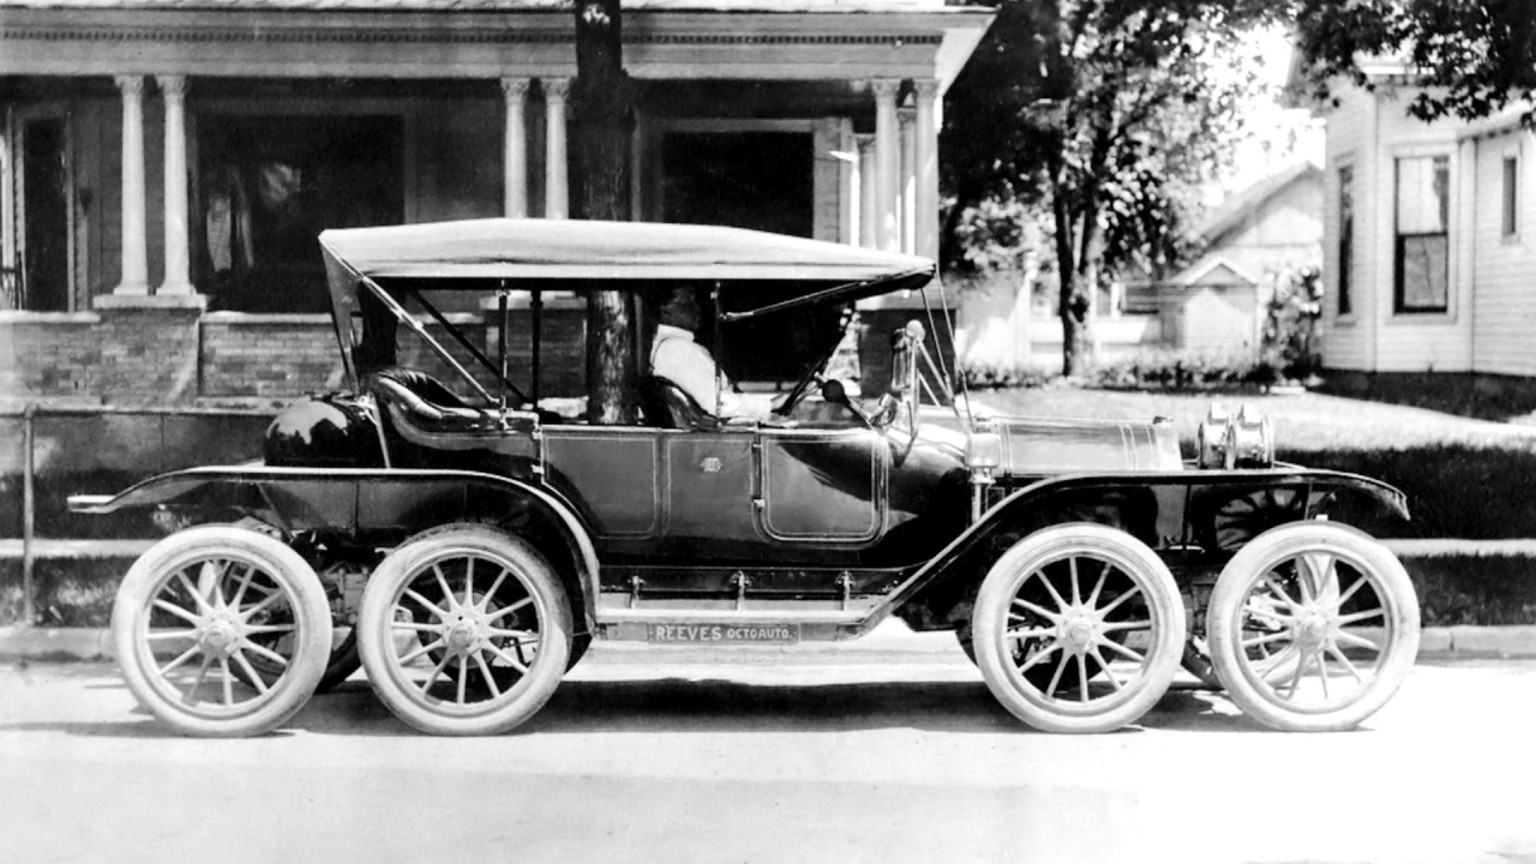 1911 Reeves OctoAuto auto https://www.youtube.com/watch?v=SJ3vQFKEYOQ